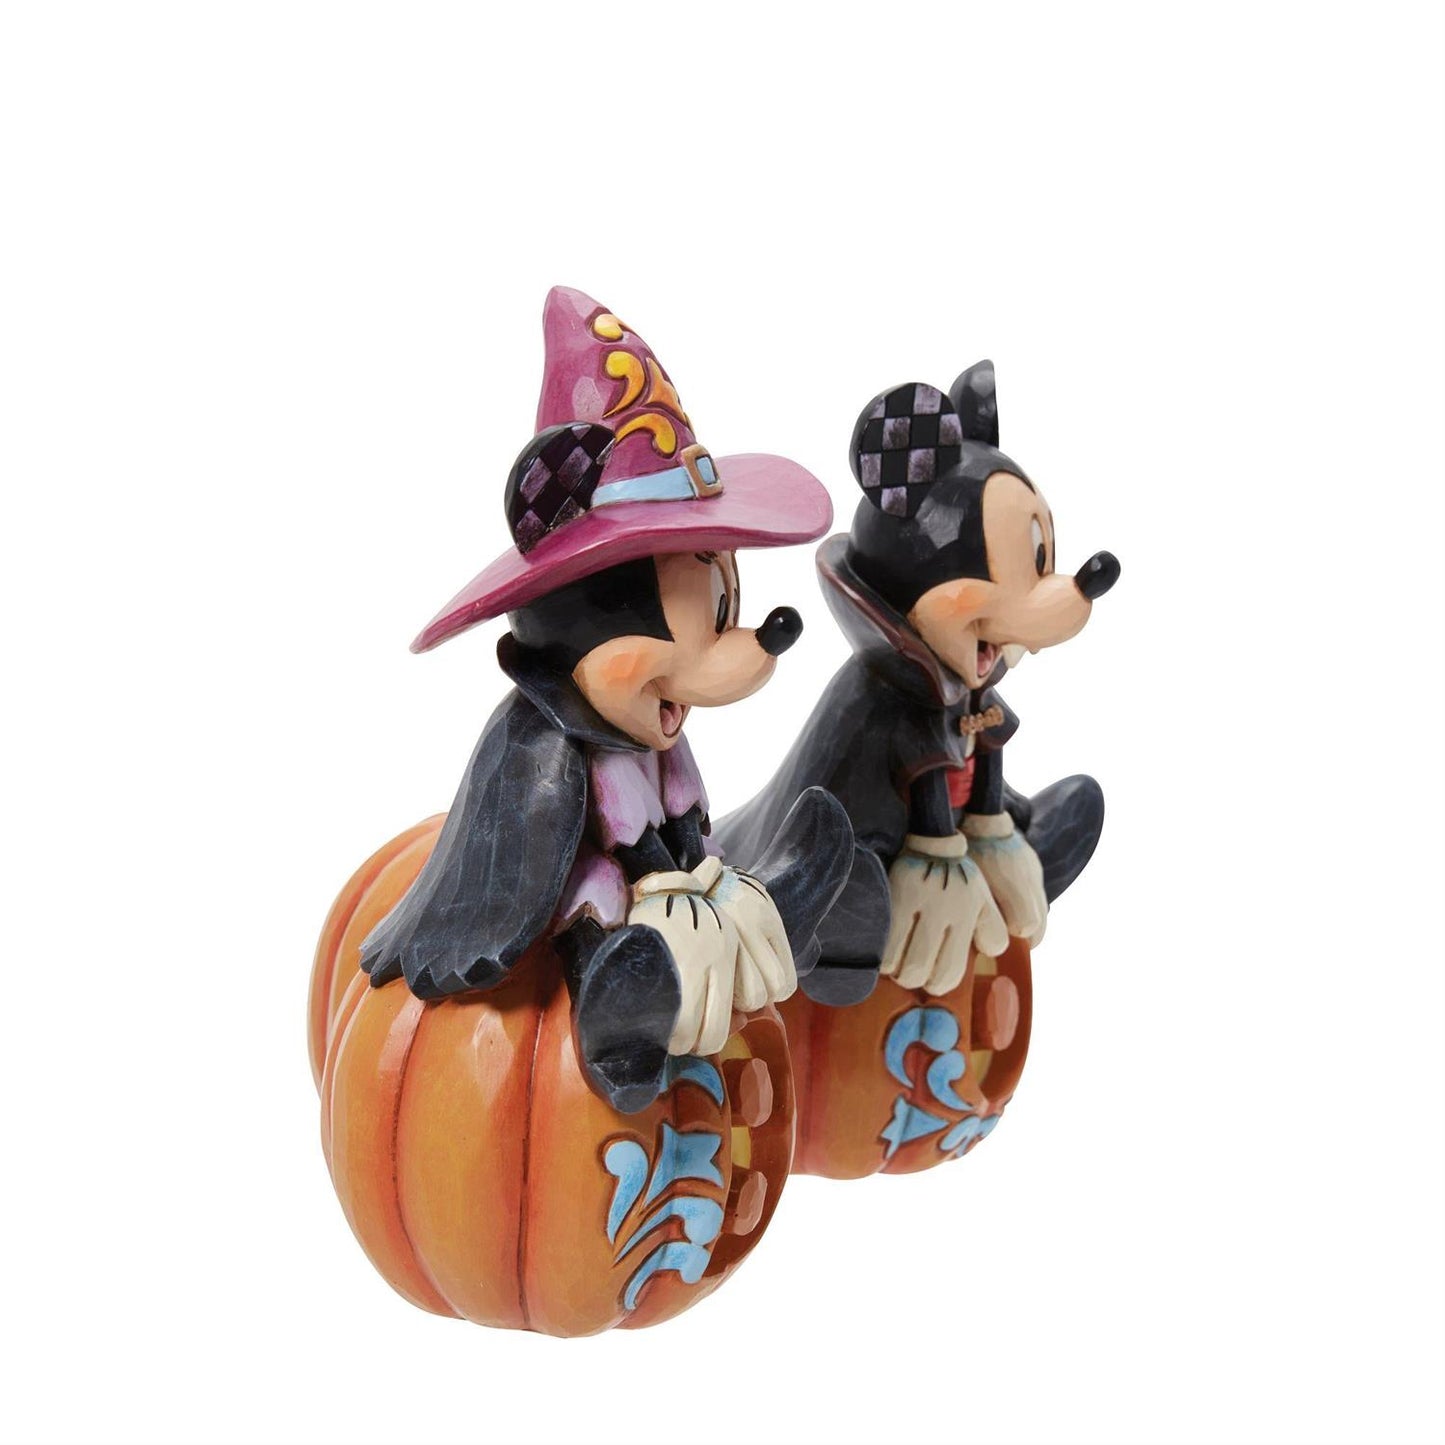 Jim Shore Disney Mickey and Minnie Halloween